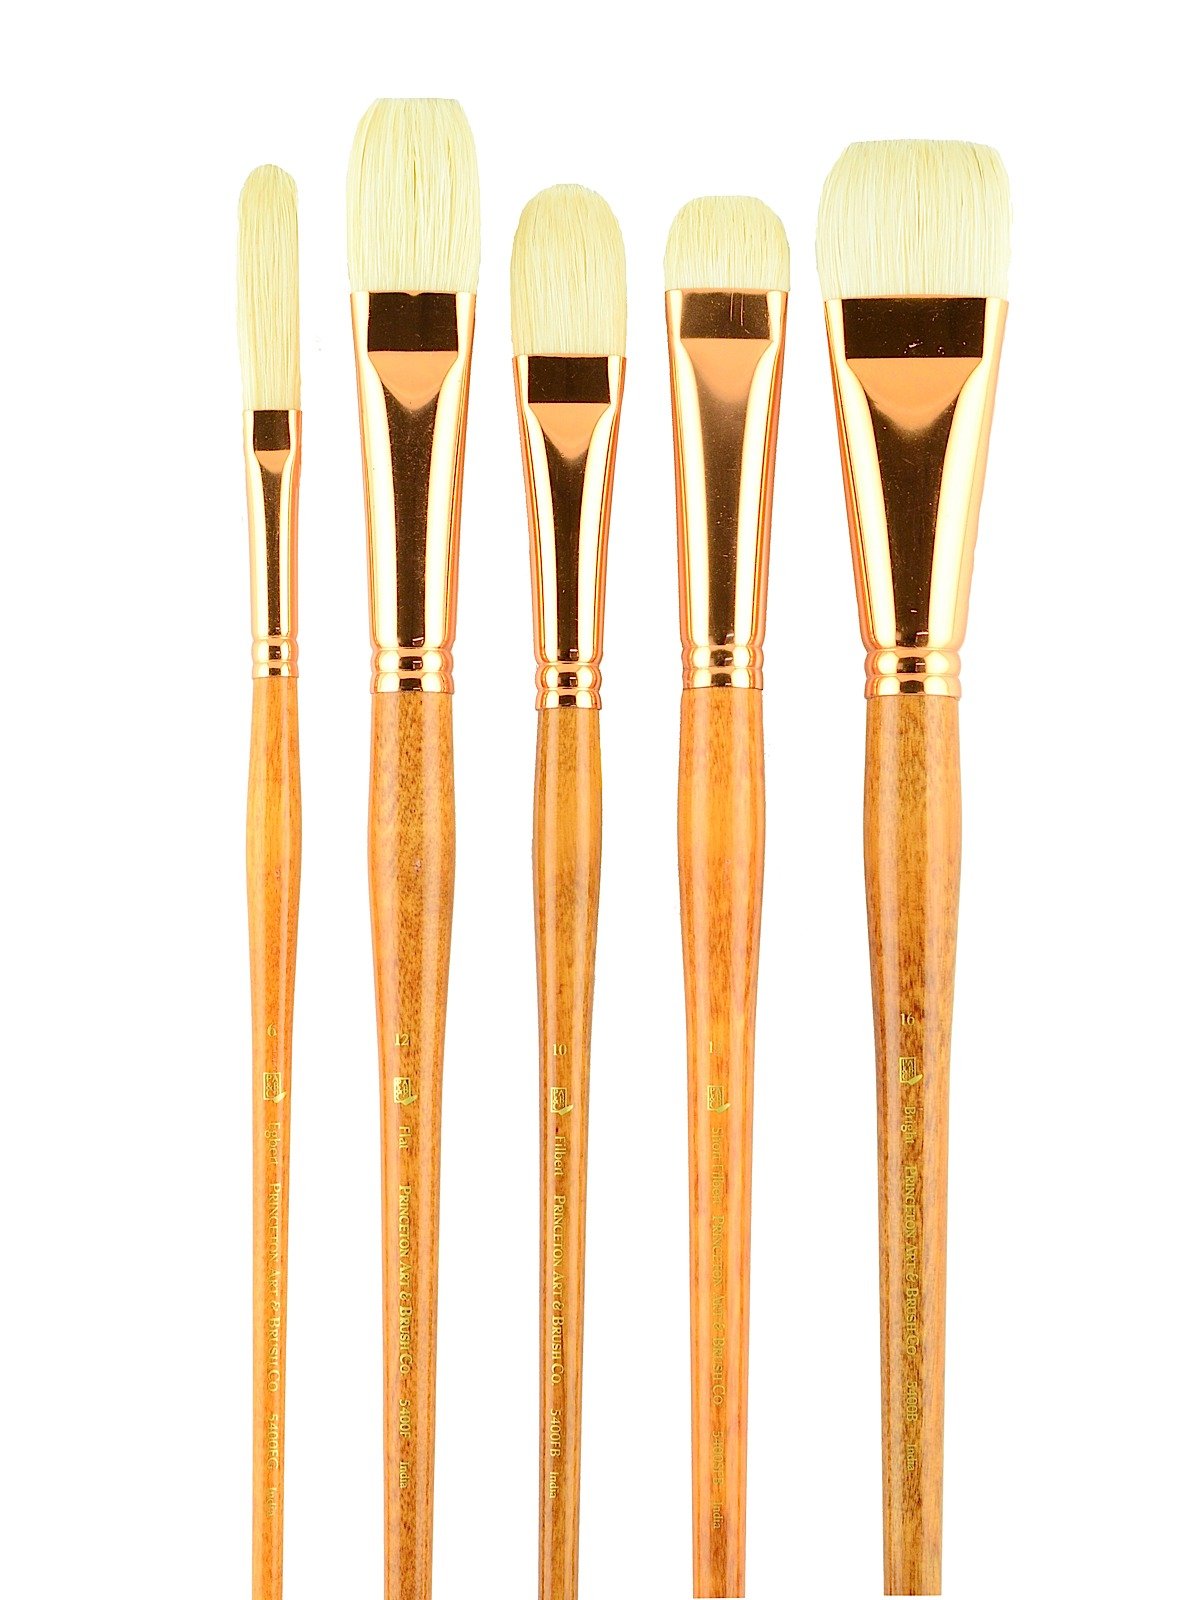 Princeton Series 5400 Refine Bristle Long Handle Brushes